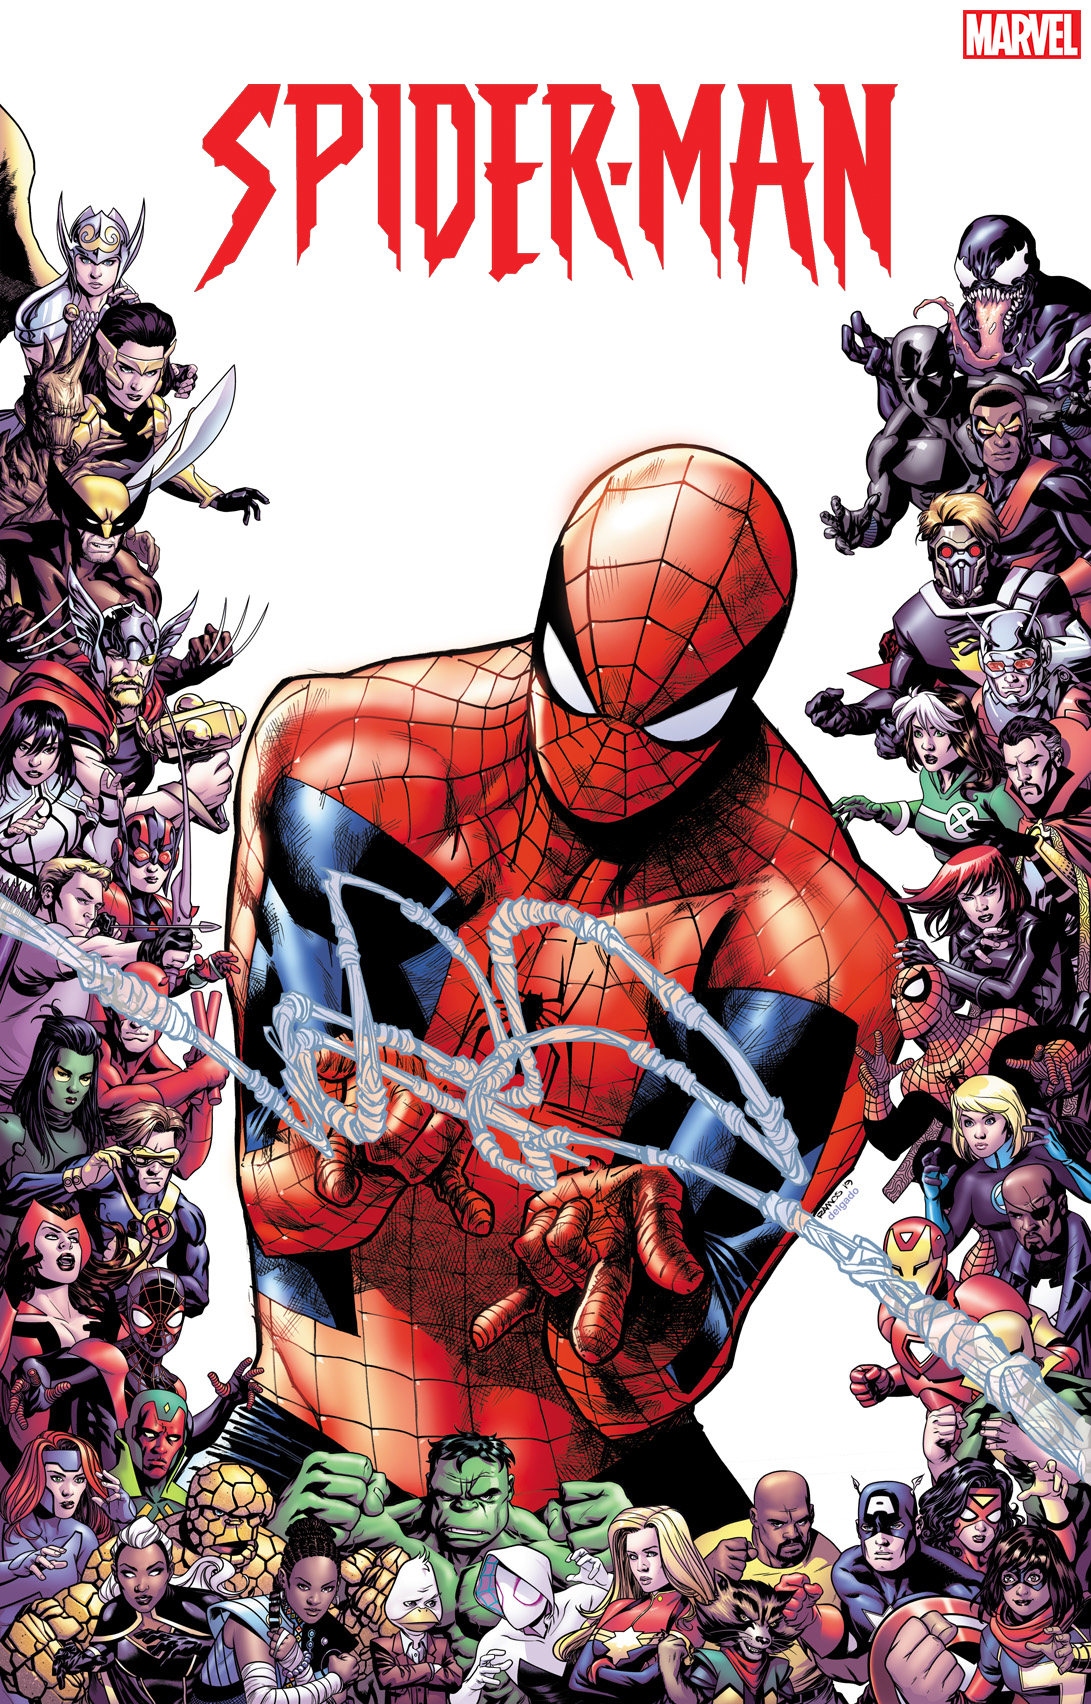 80th anniversary frame variants - Amazing Spider-Man #28 by Humberto Ramos